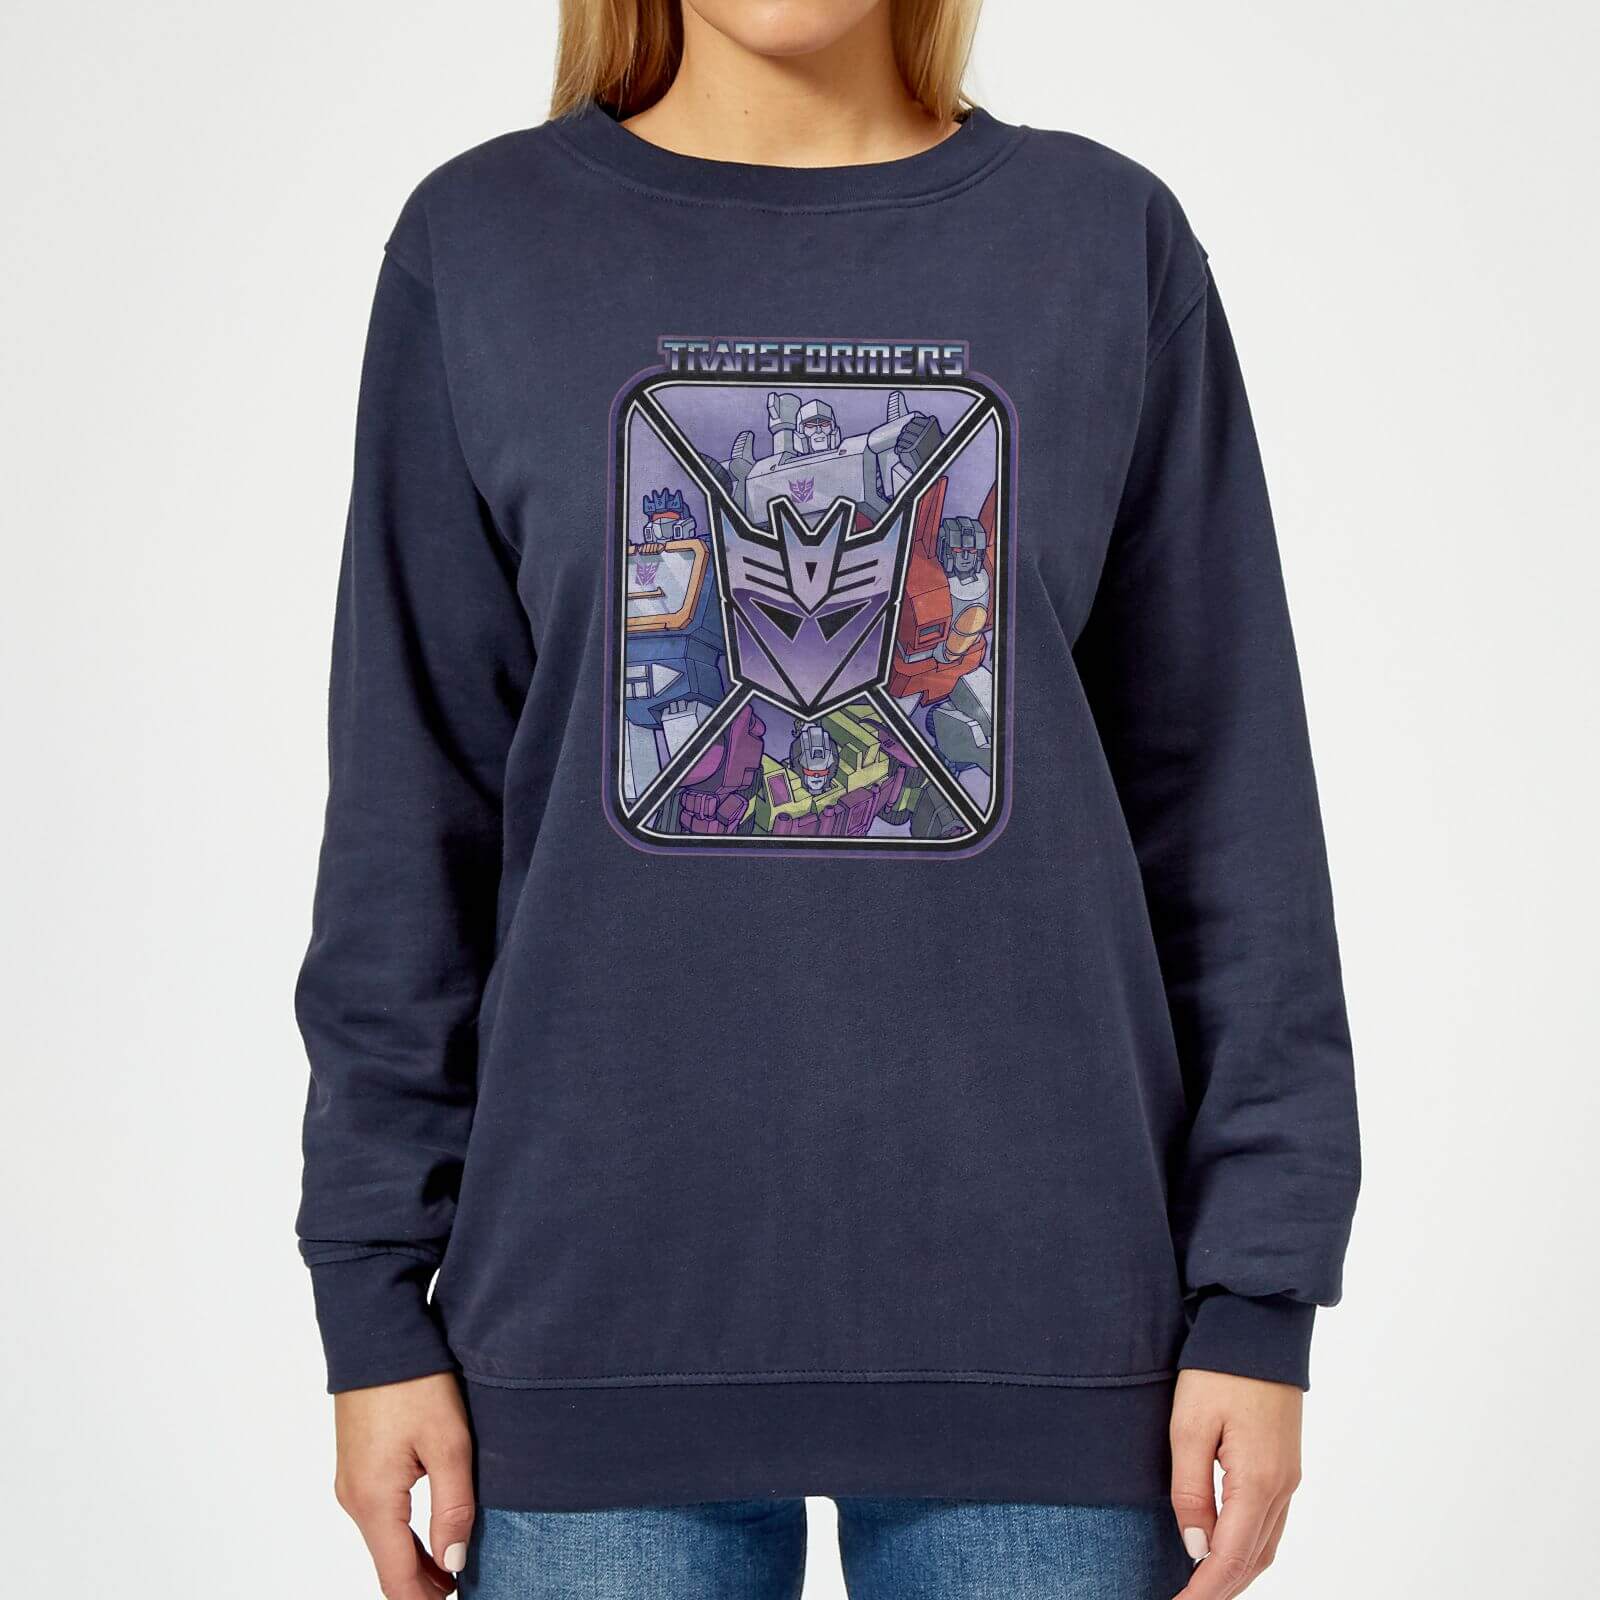 Transformers Decepticons Women's Sweatshirt - Navy - XS - Navy